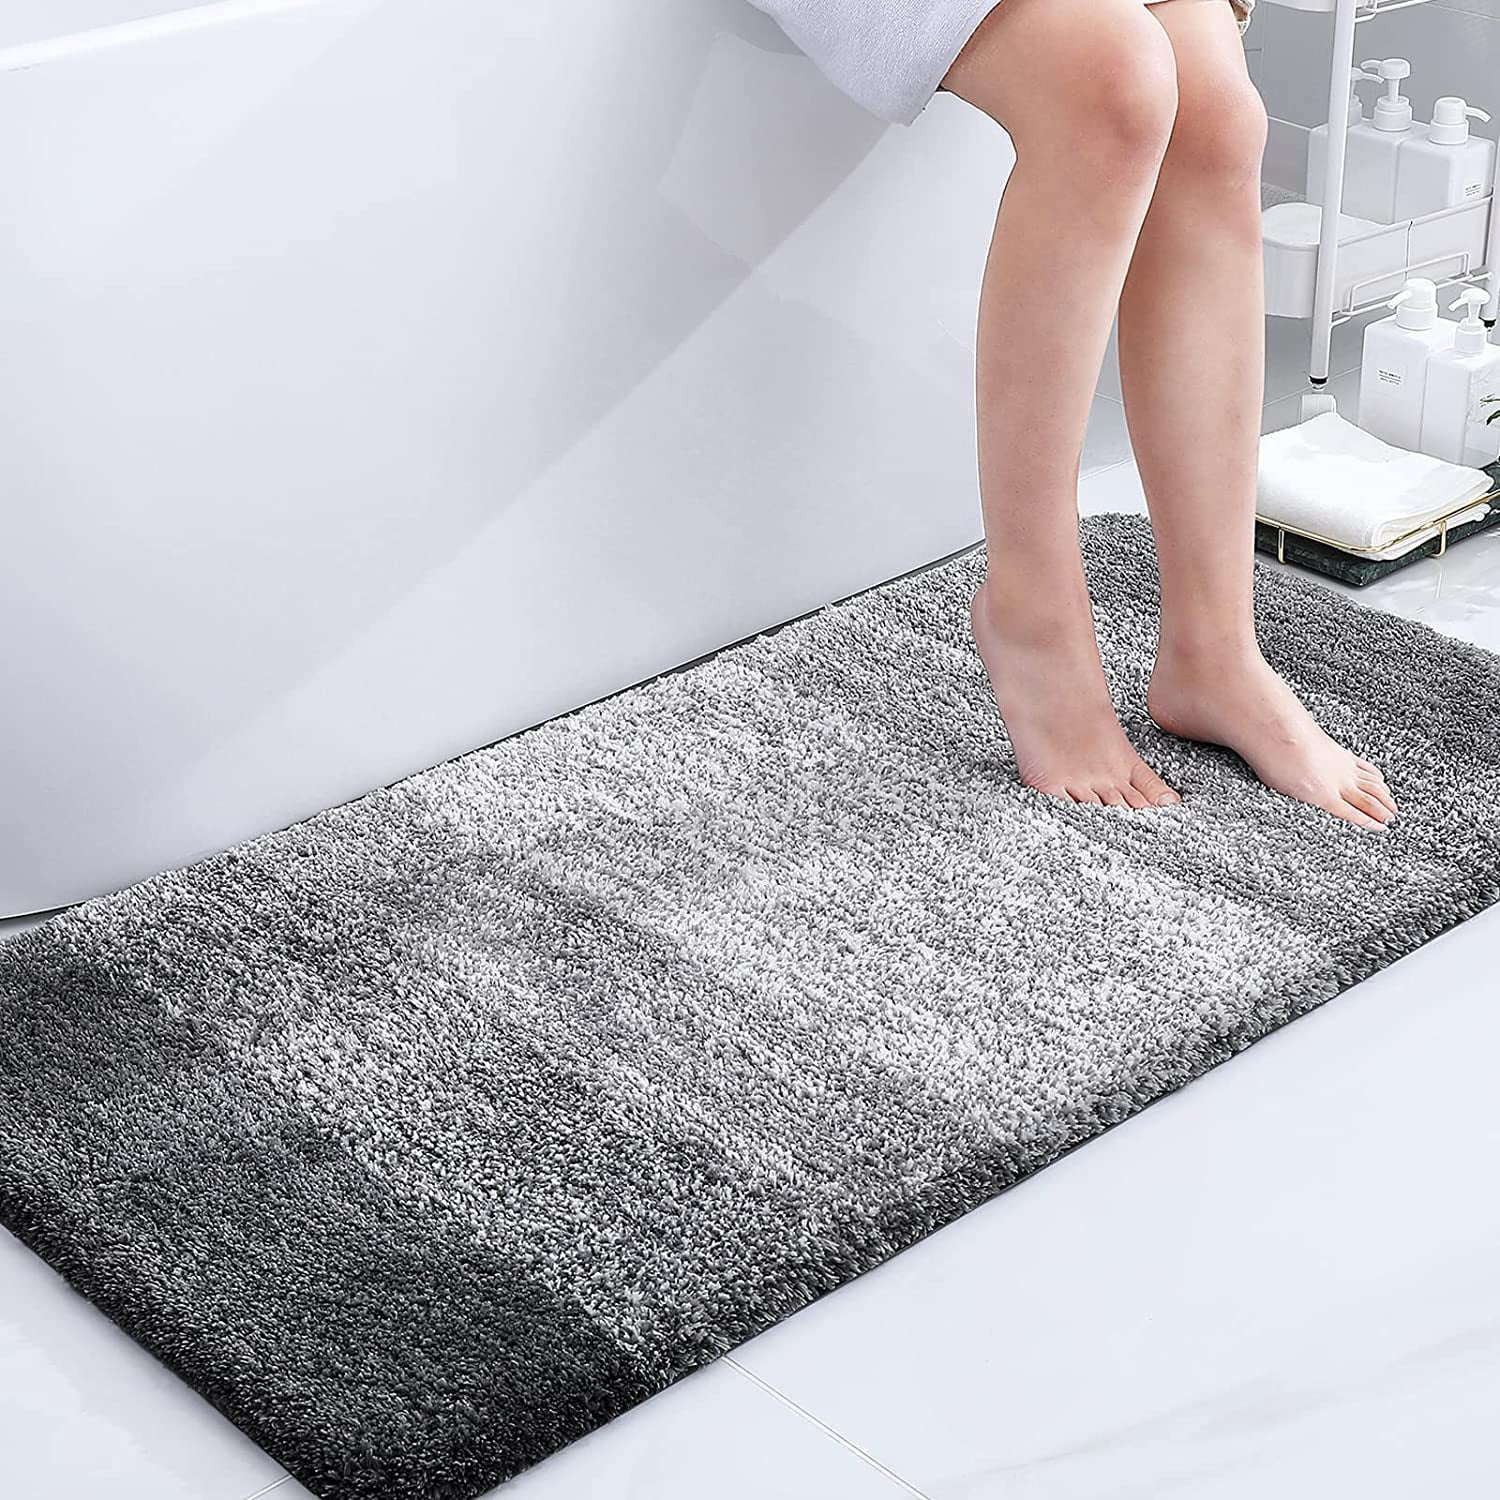 OLANLY Luxury Bathroom Rug Mat 24x16, Extra Soft and Absorbent Microfiber  Bath Rugs, Non-Slip Plush Shaggy Bath Carpet, Machine Wash Dry, Bath Mats